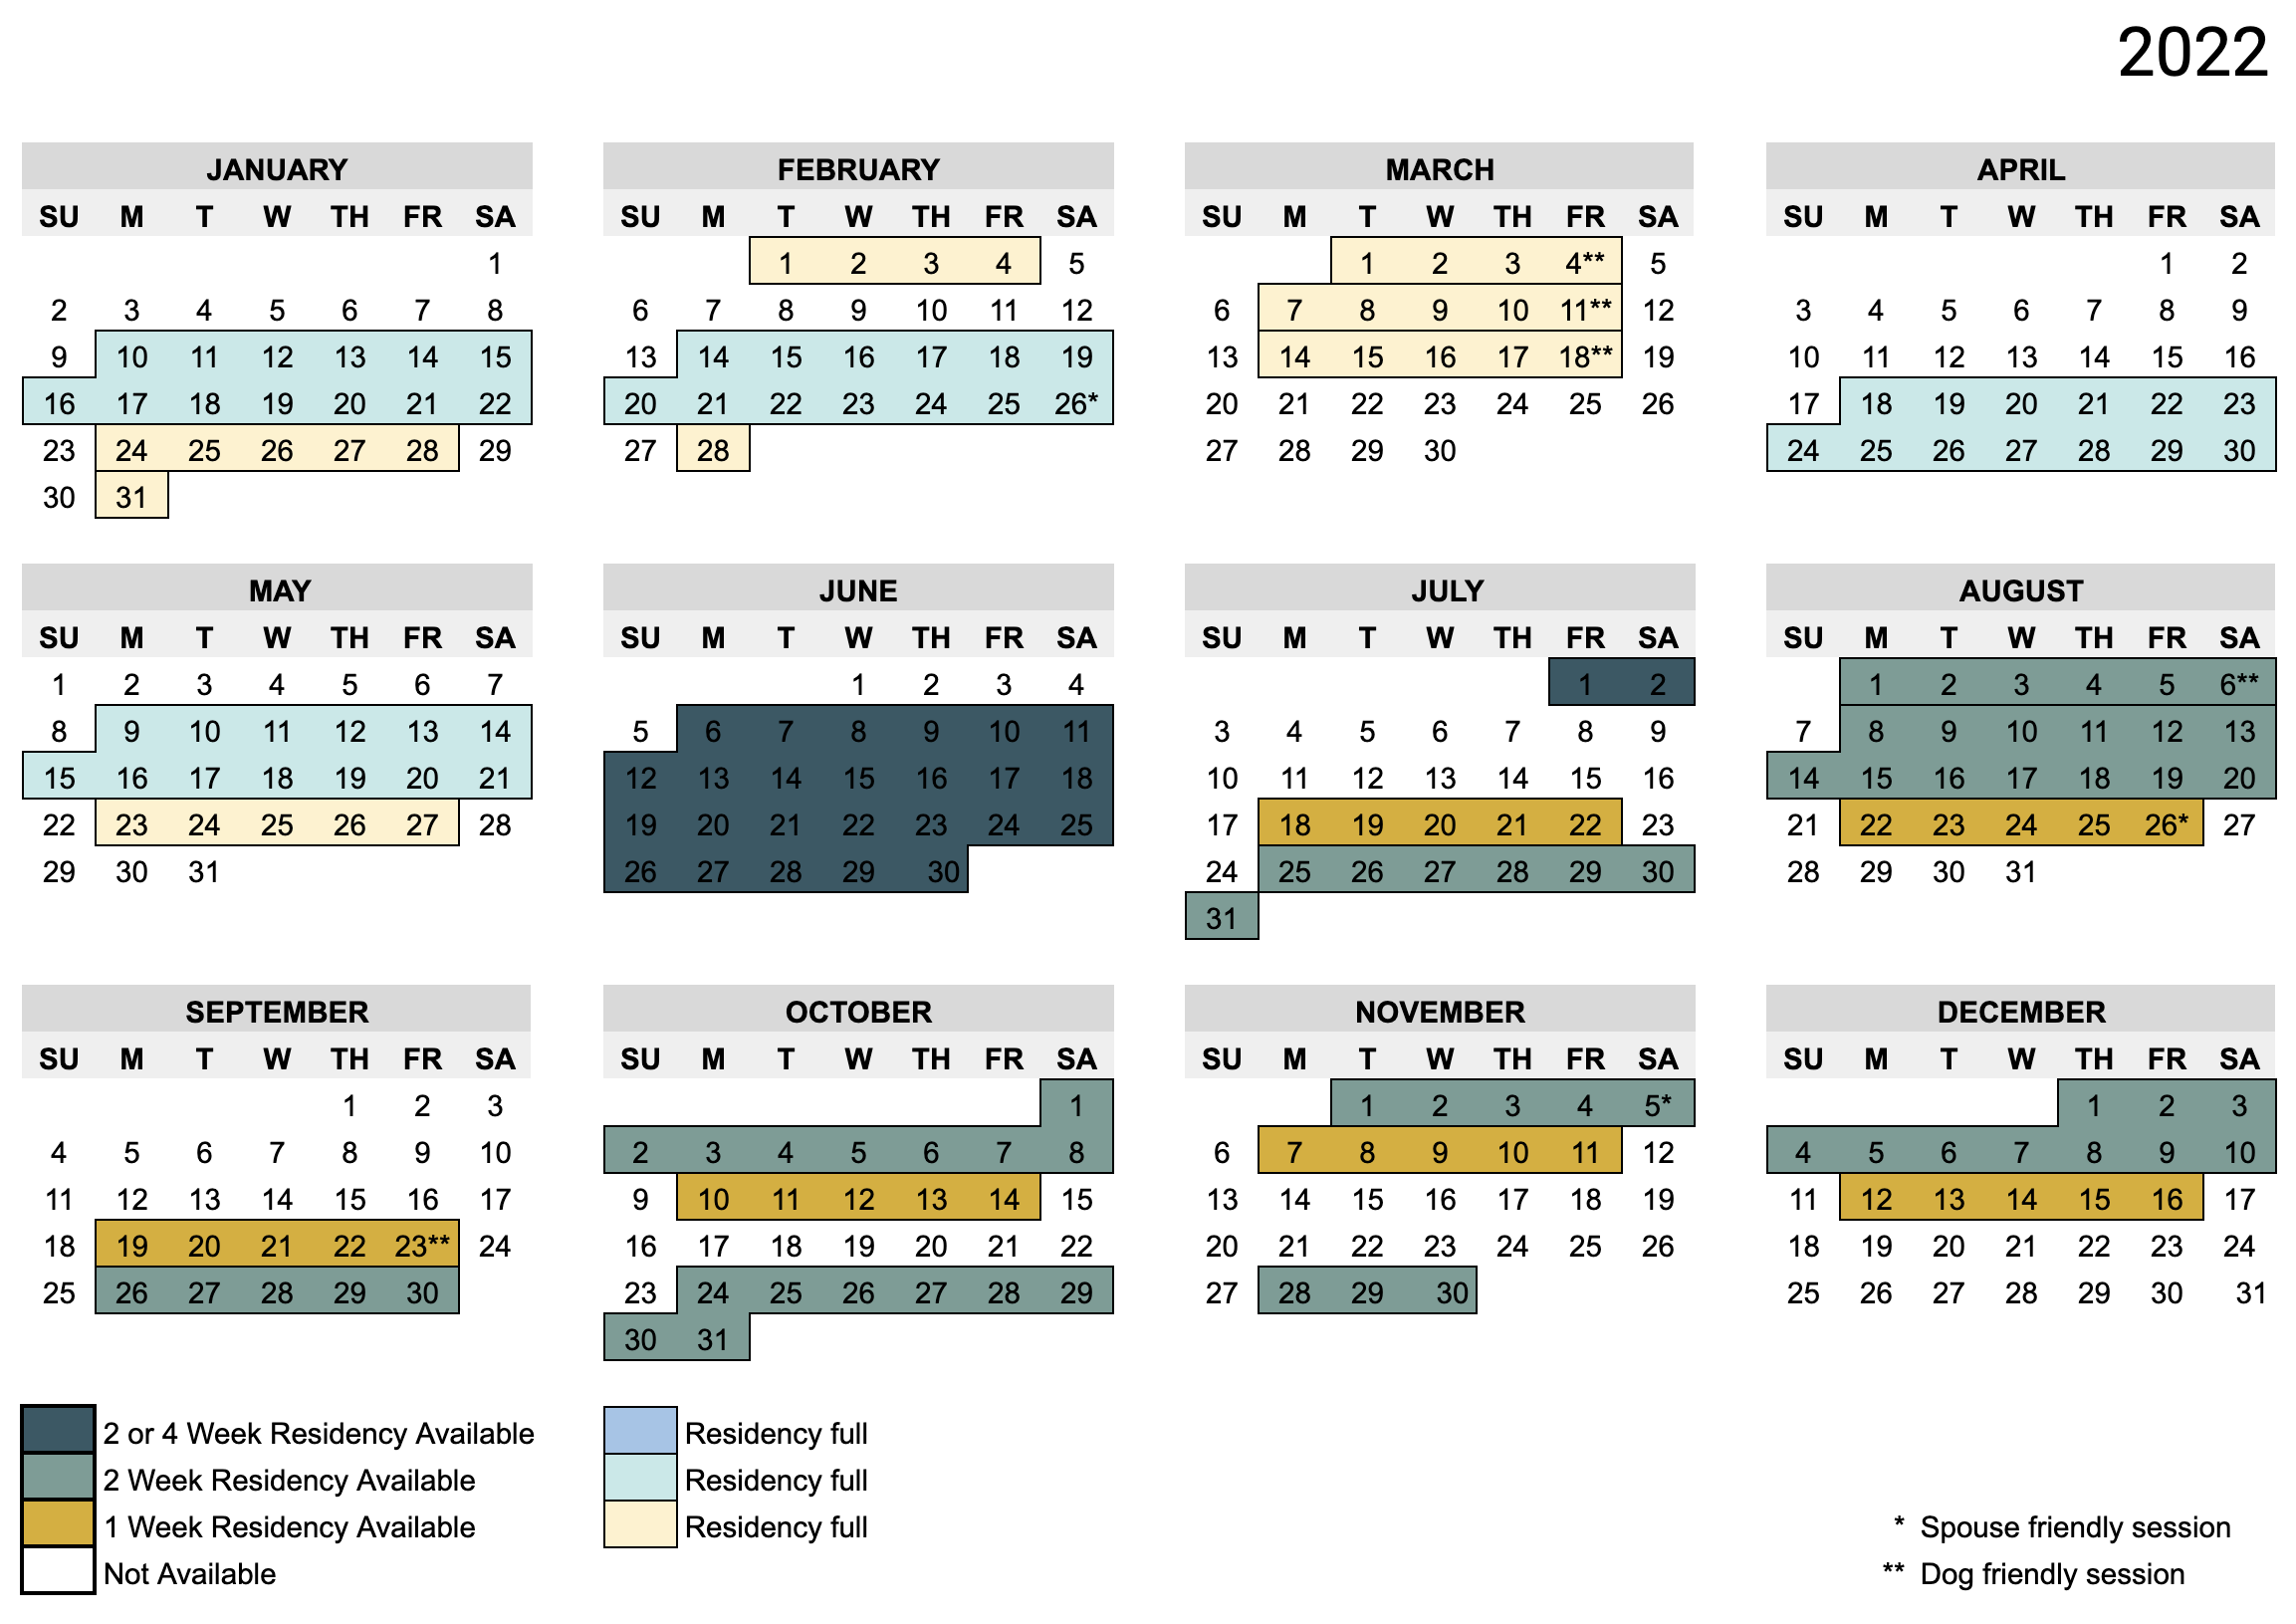 ICR 2022 Residency Session Calendar